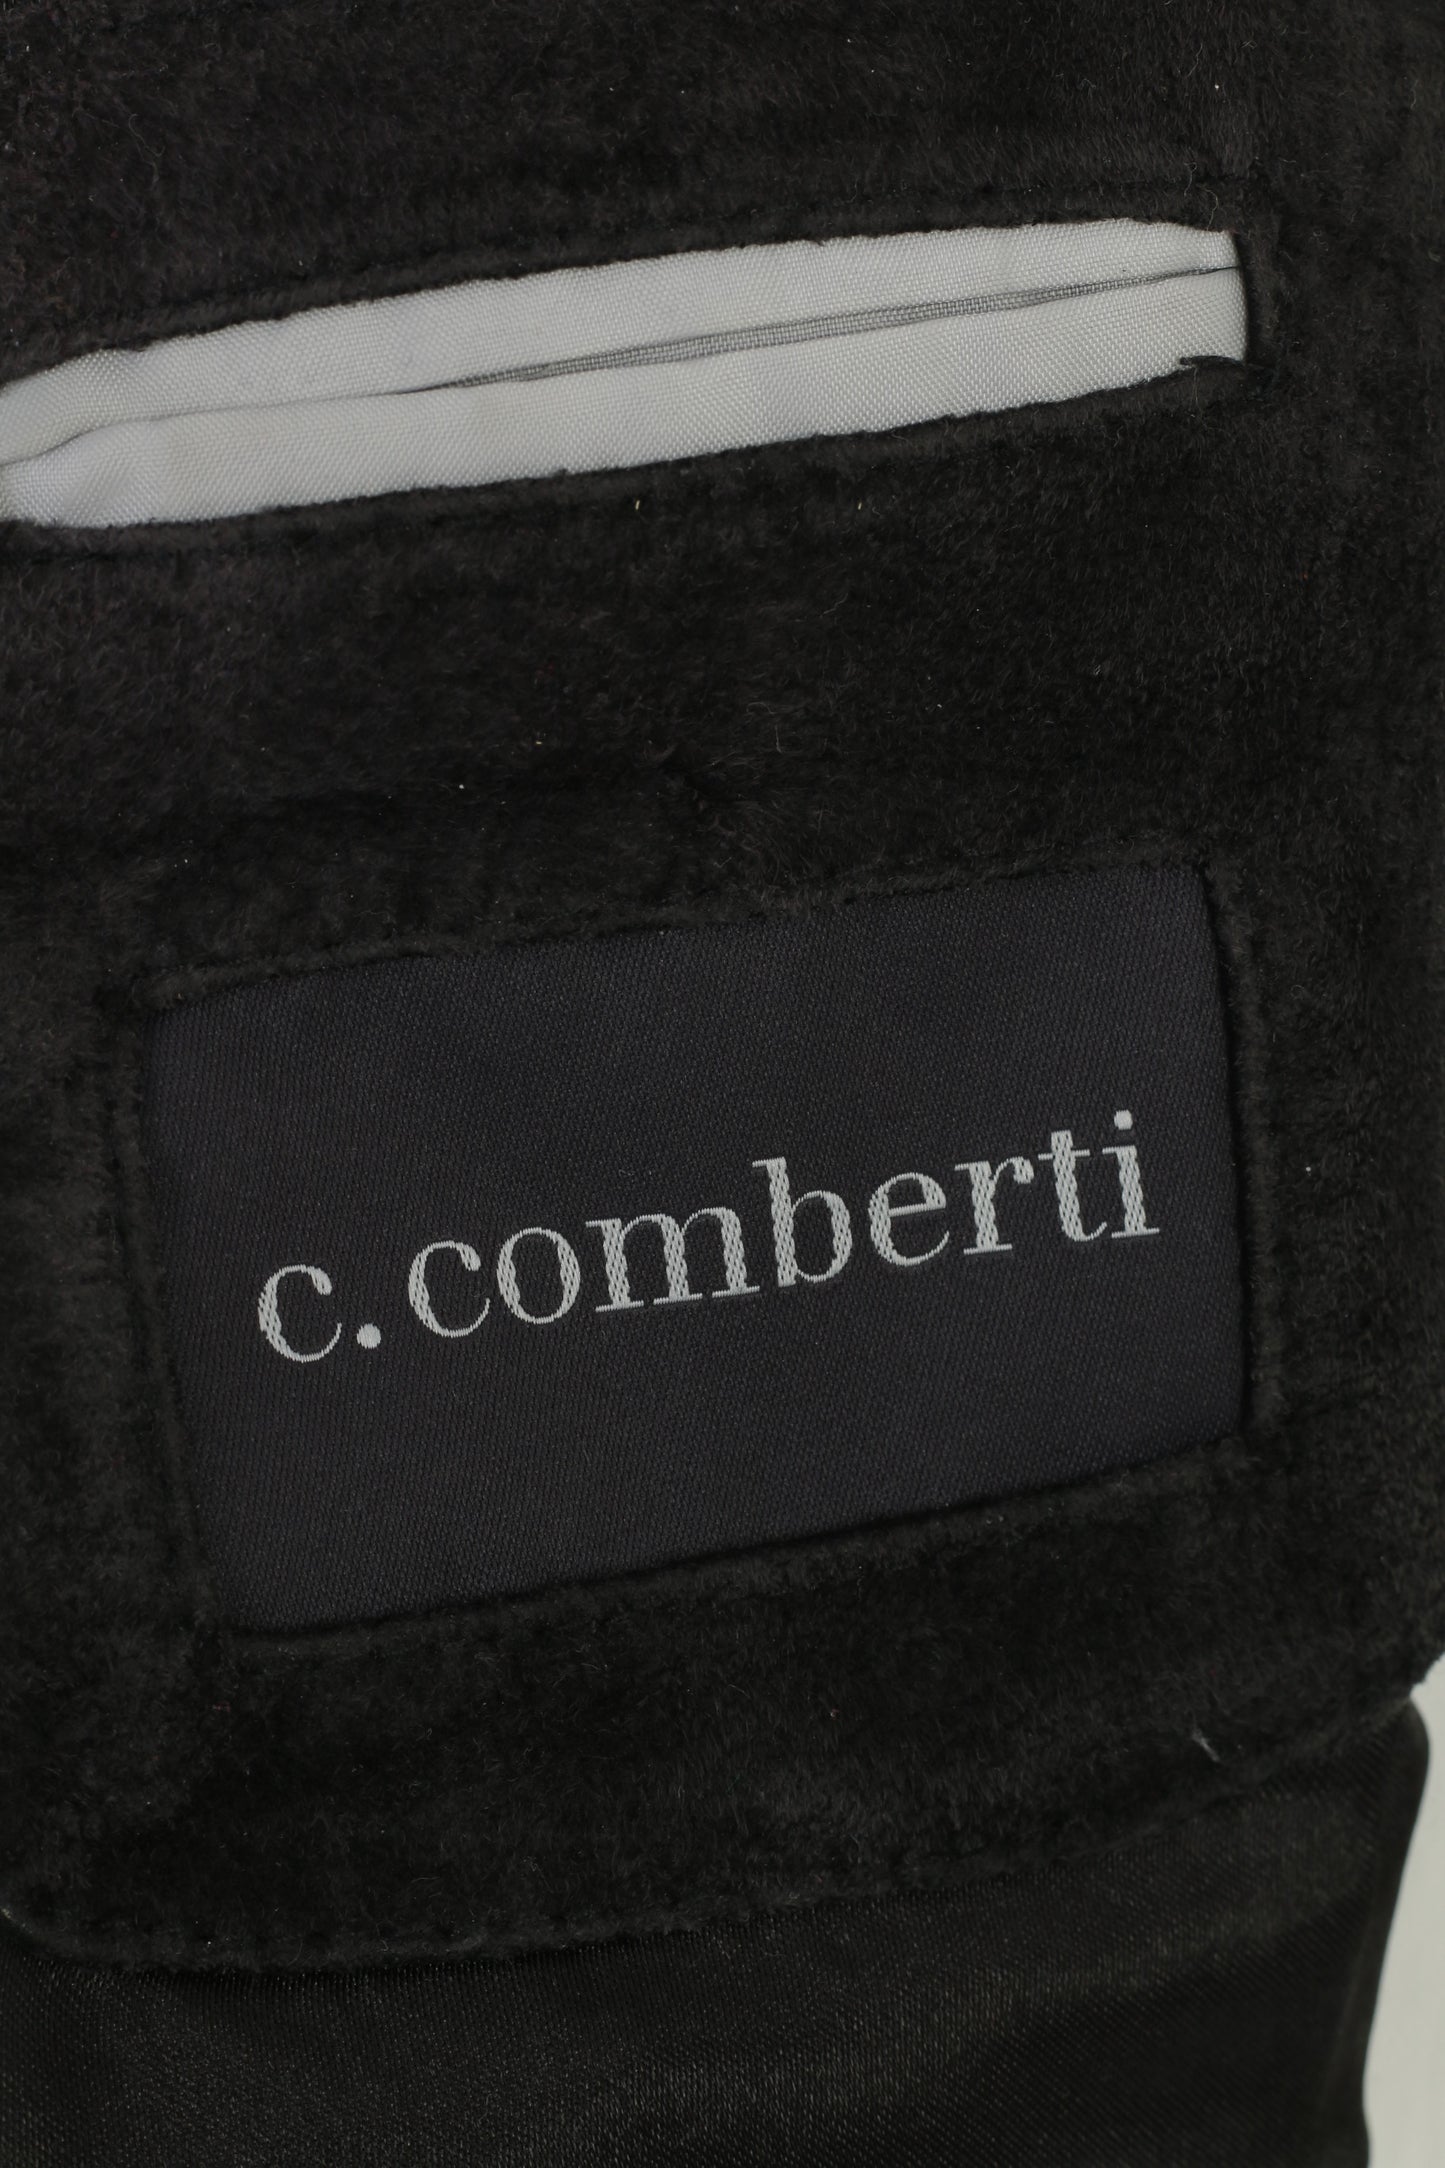 C.Comberti Uomo 58 XXL Gilet in pelle Nero Vintage Western Bottoms Tasche Top classico